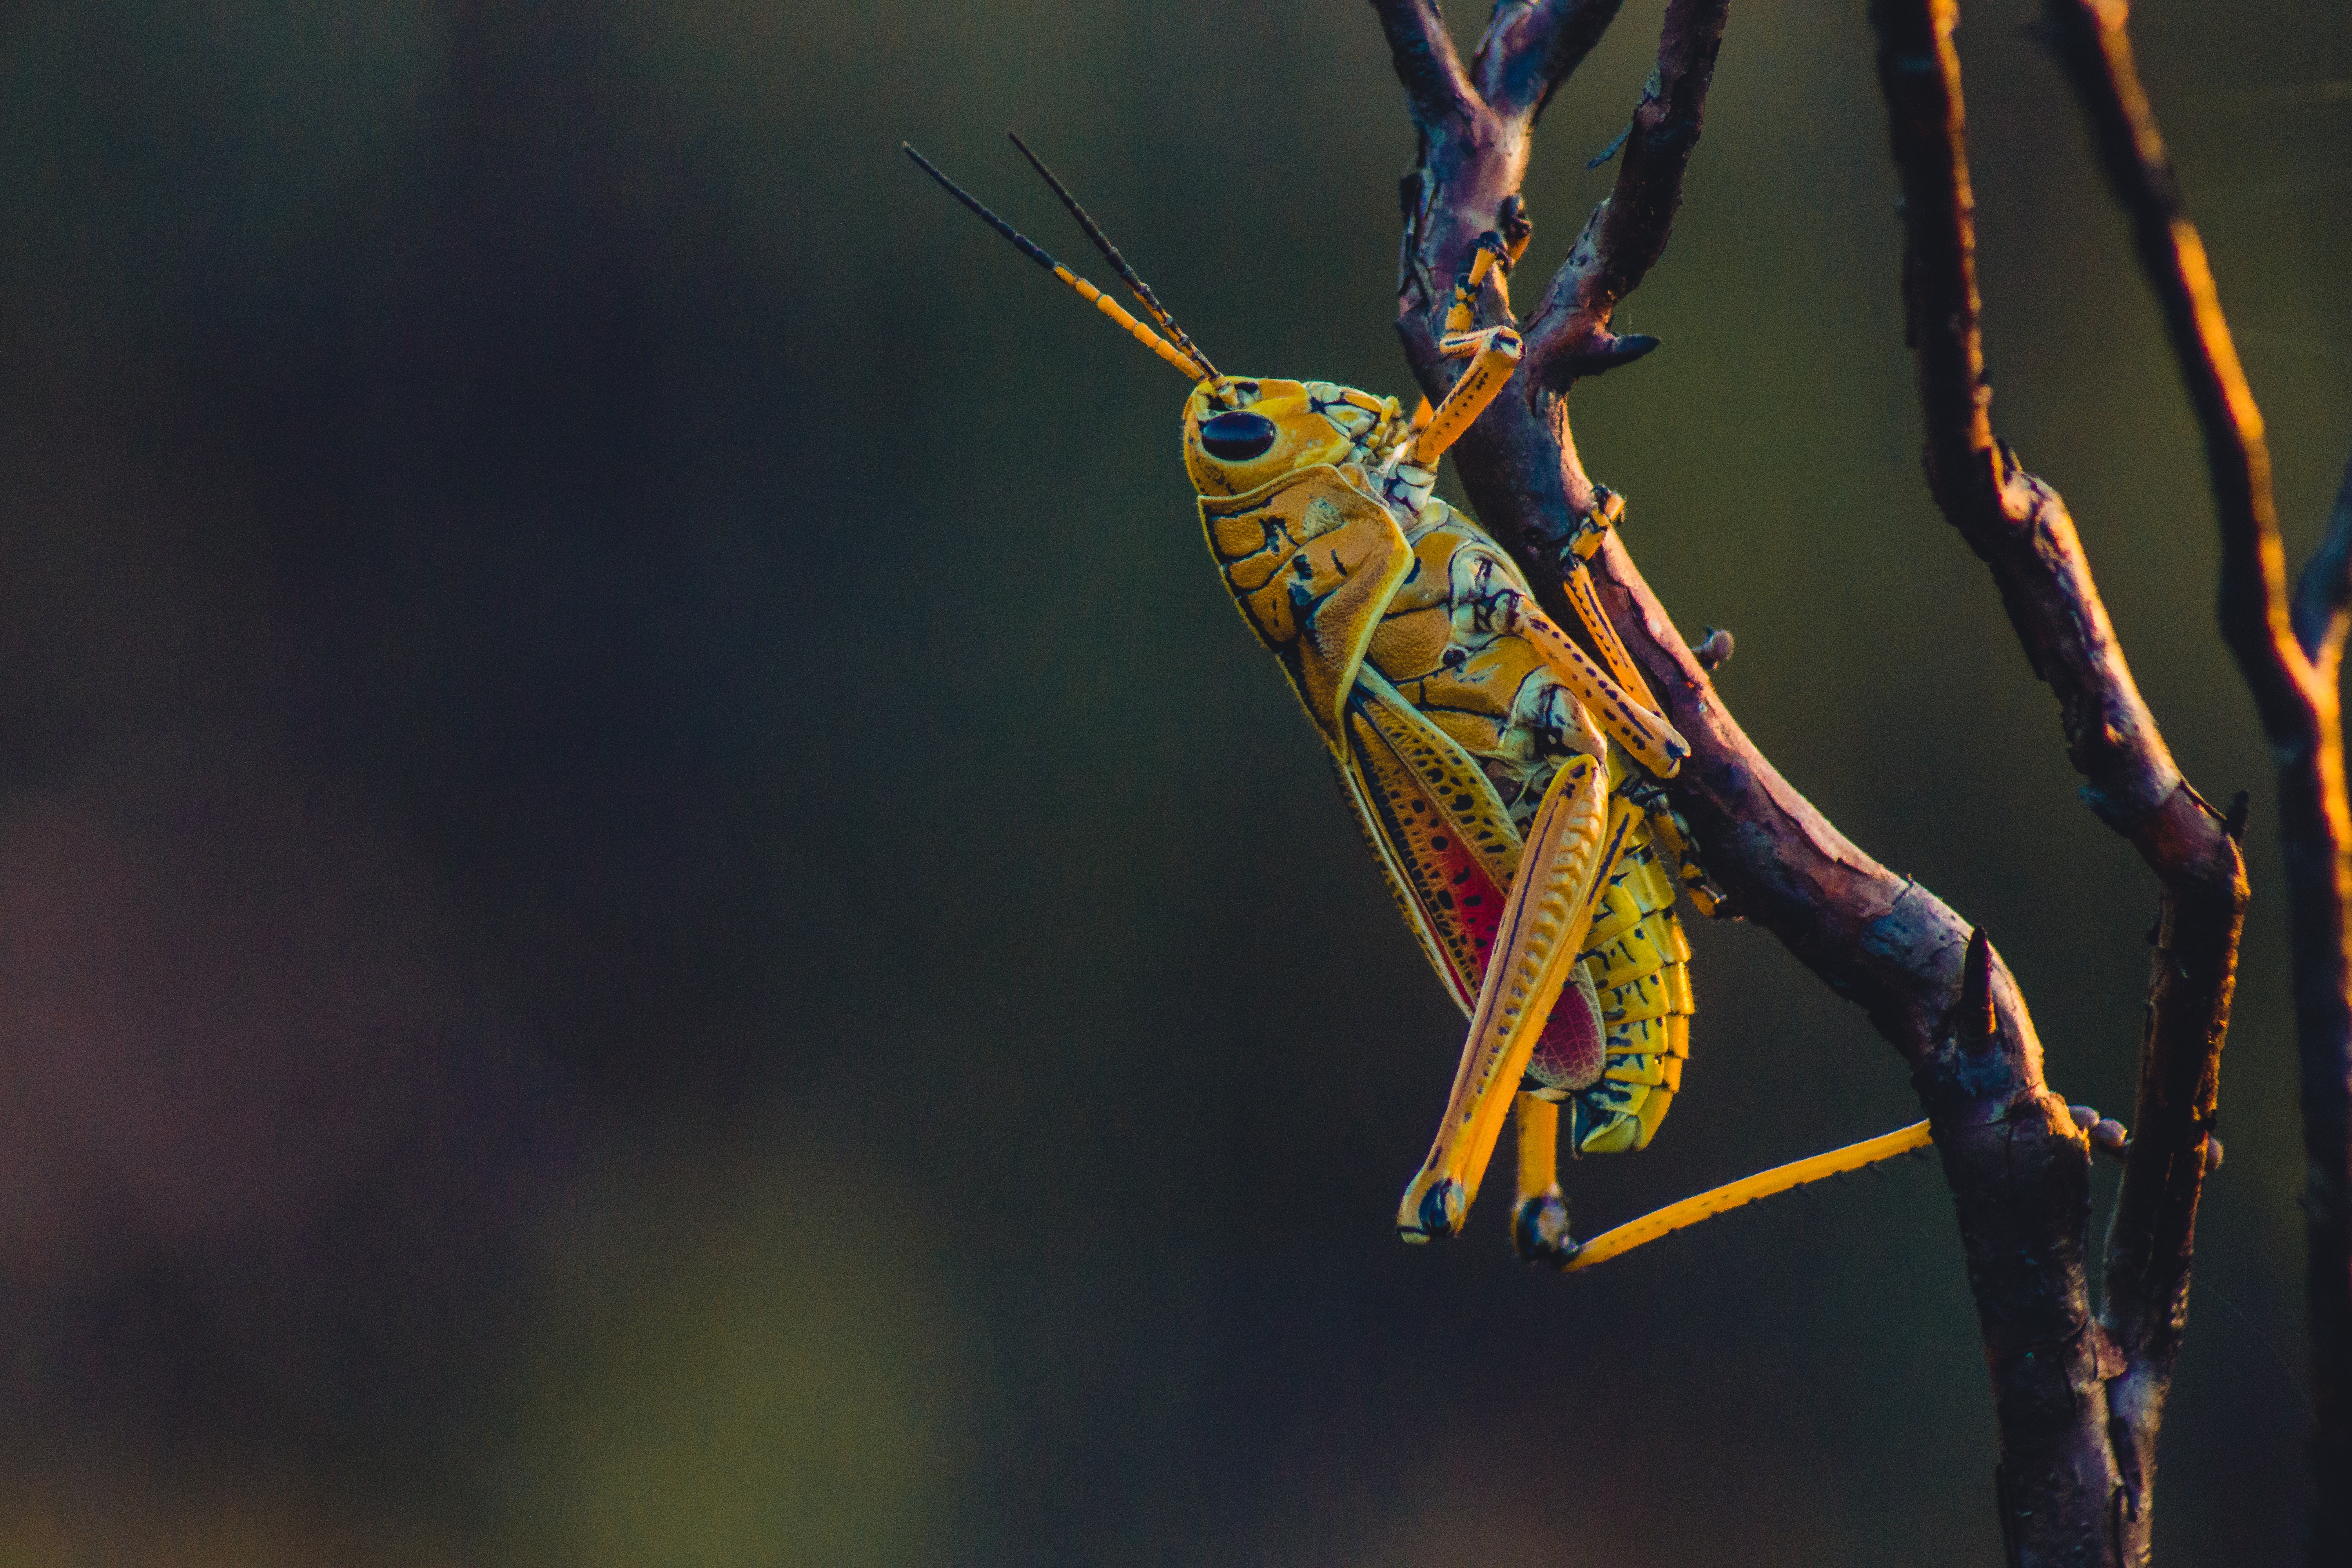 Grasshopper yellow